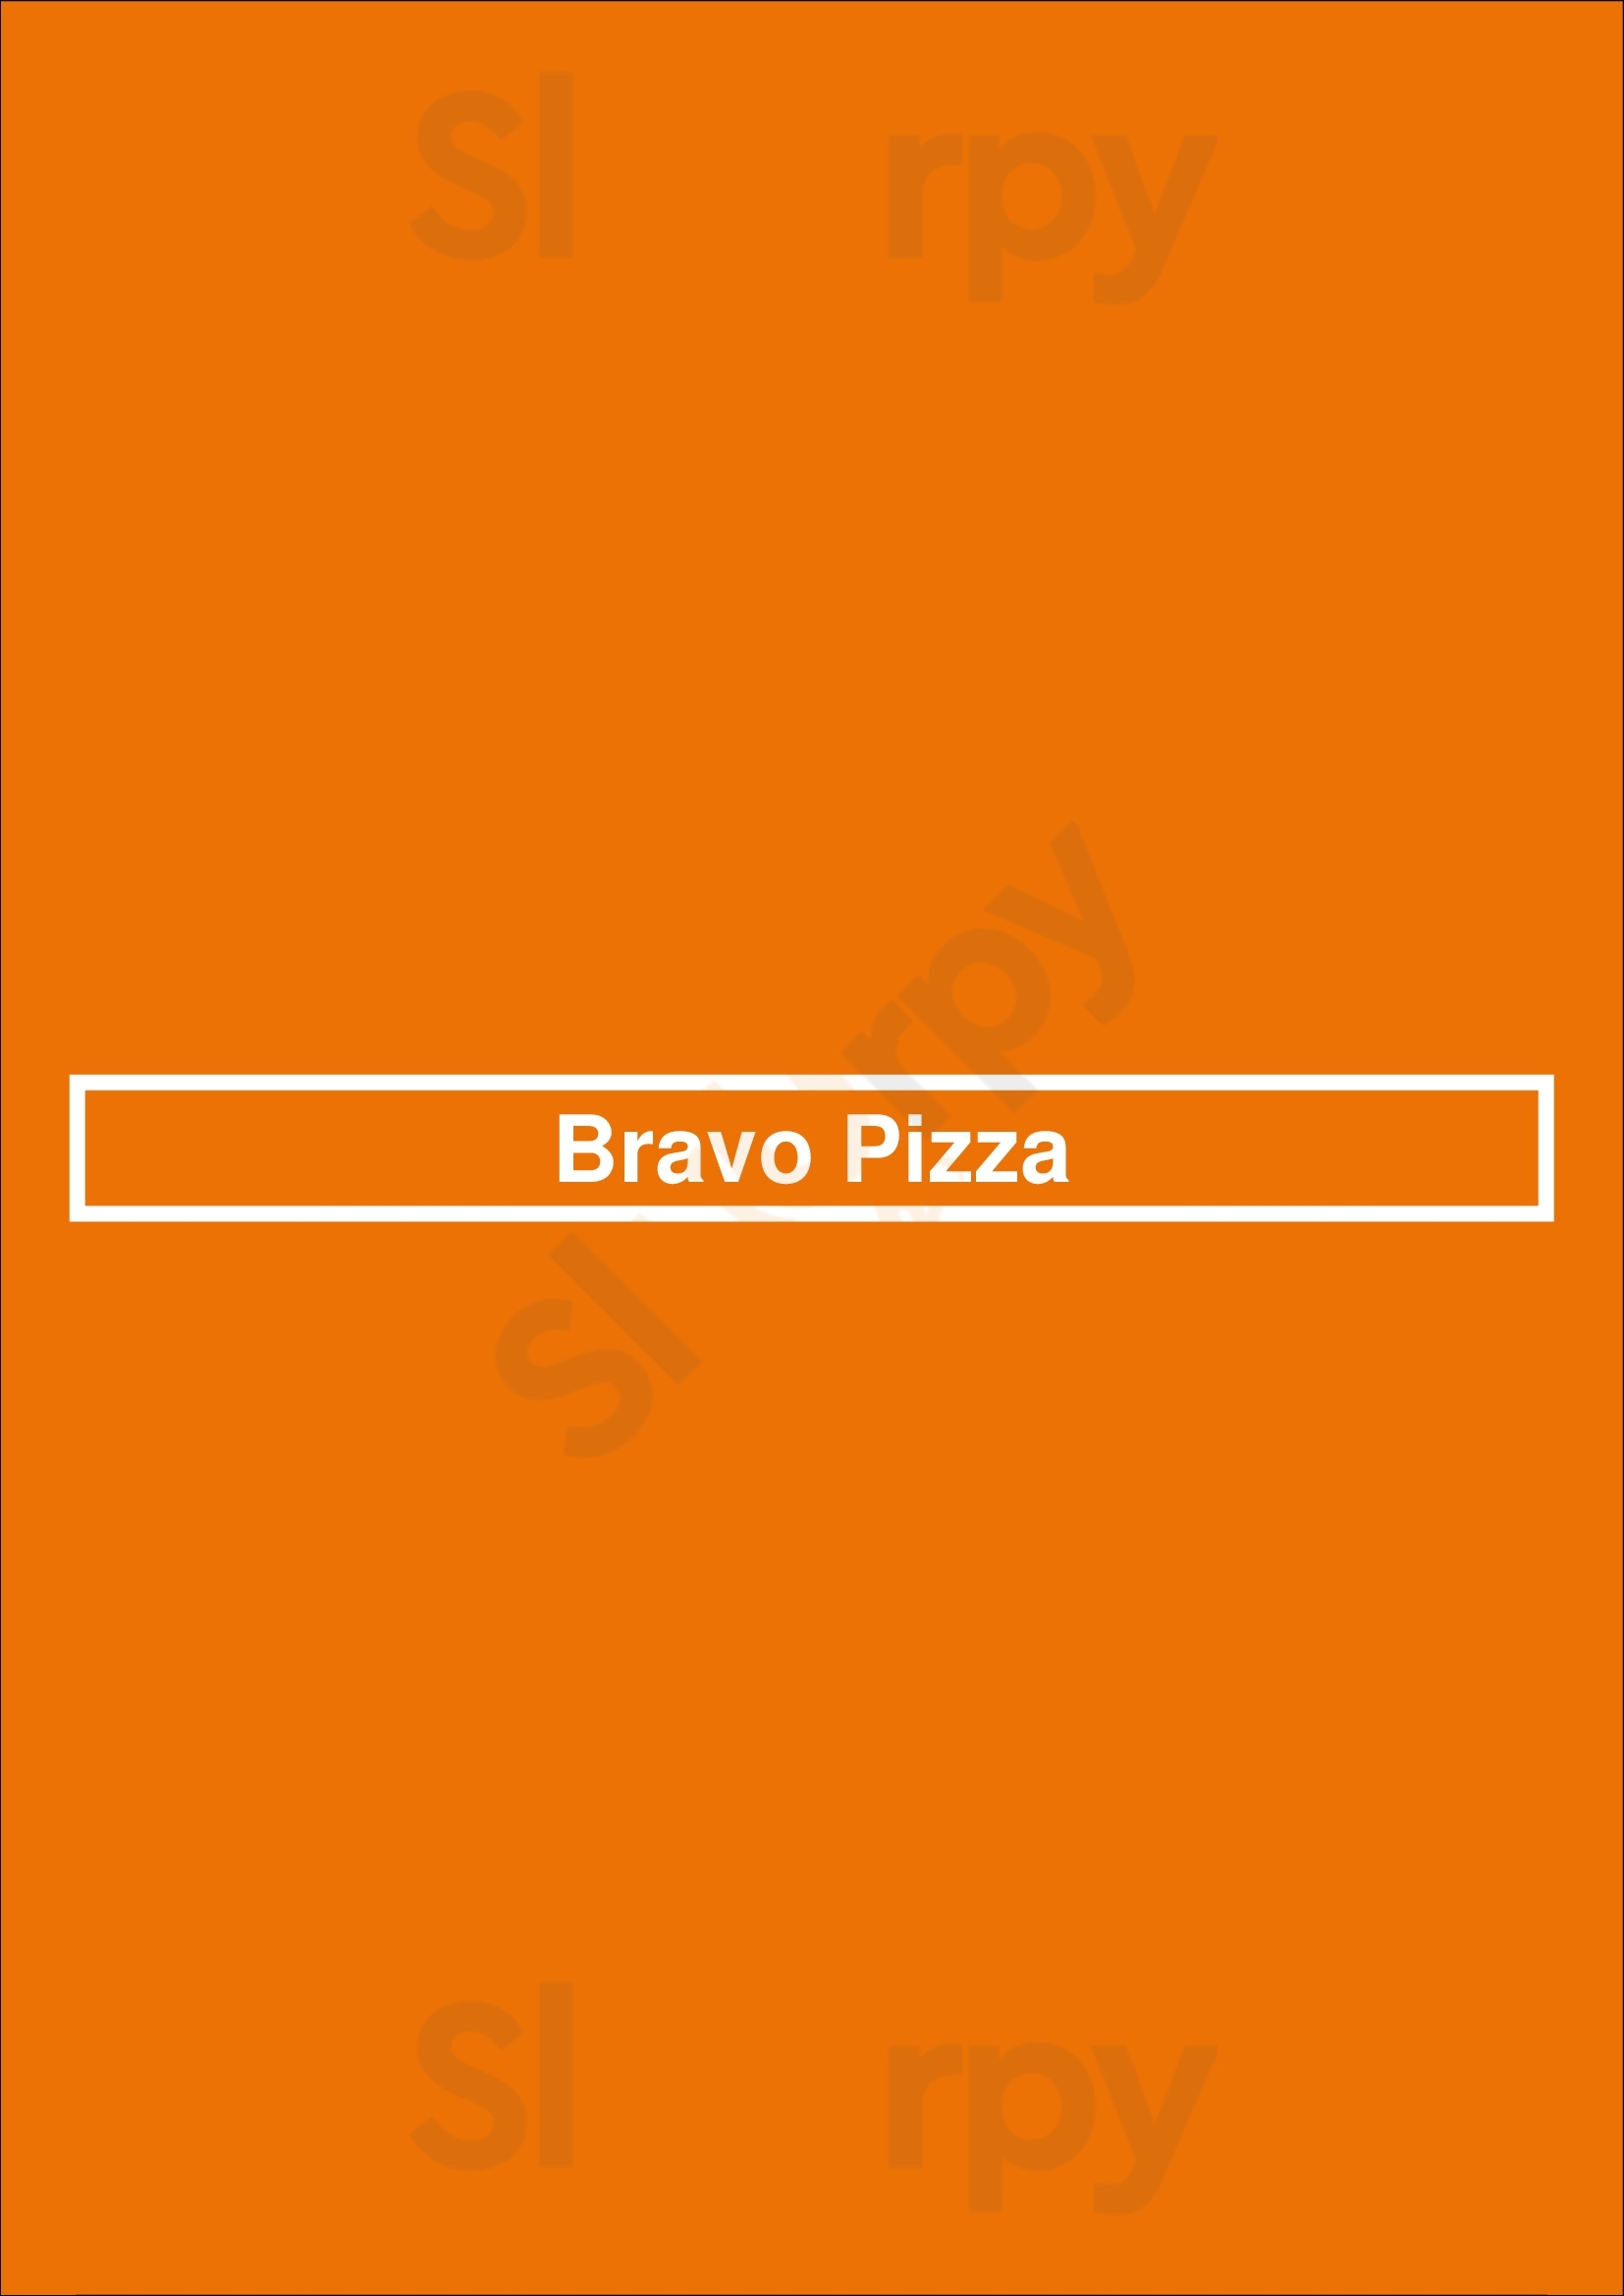 Bravo Pizza Los Angeles Menu - 1